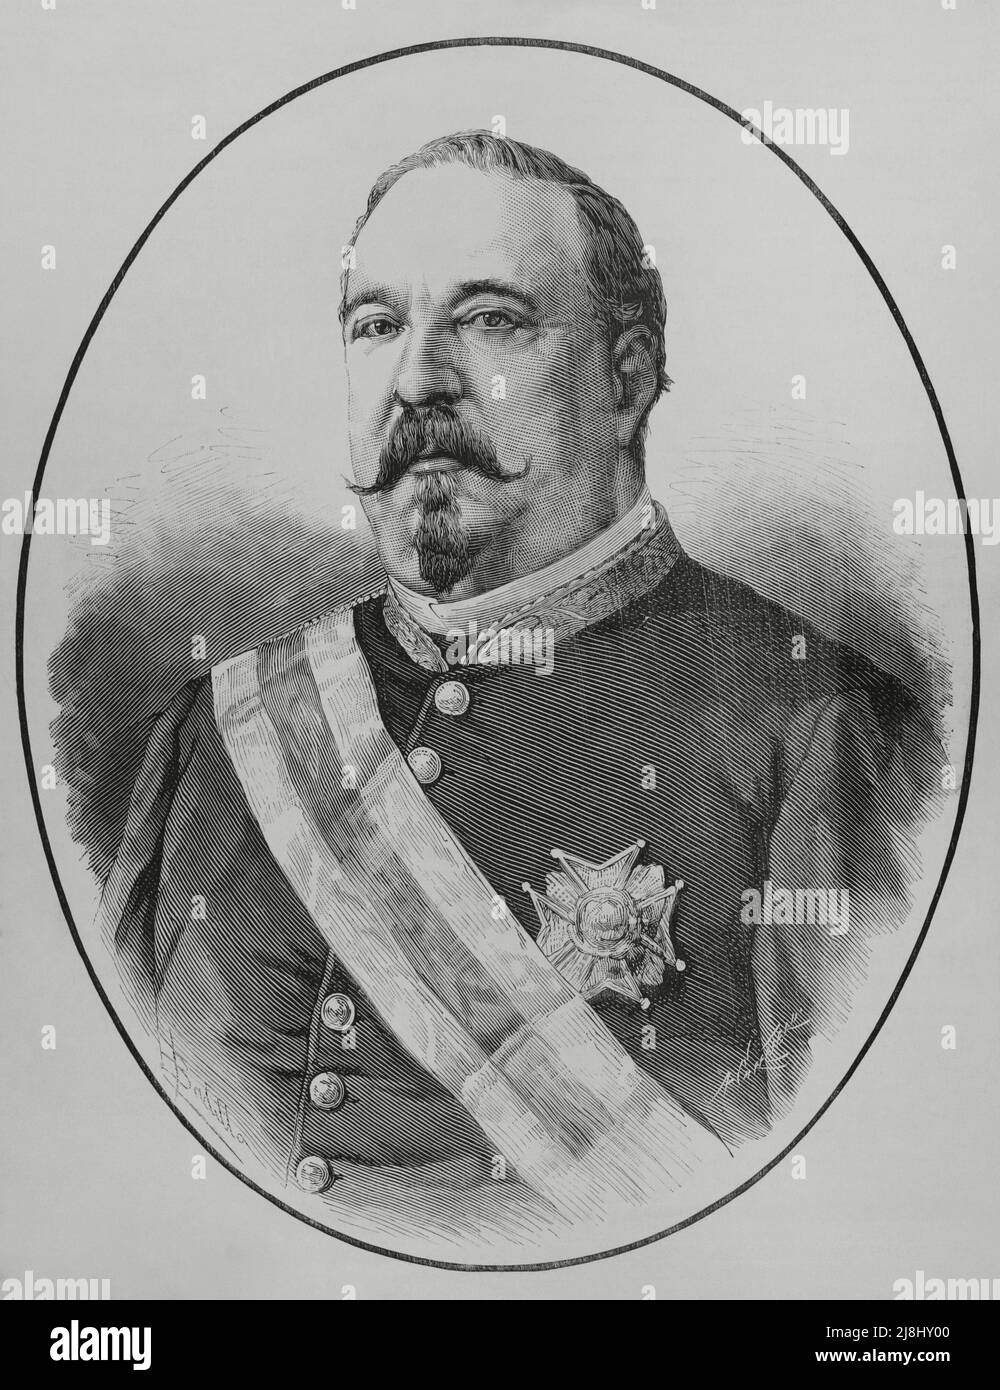 Blas Villate y de la Hera (1824-1882). Spanish military. Captain General of the island of Cuba between 1870 and 1872. Portrait. Engraving by Carretero, 1882. Stock Photo